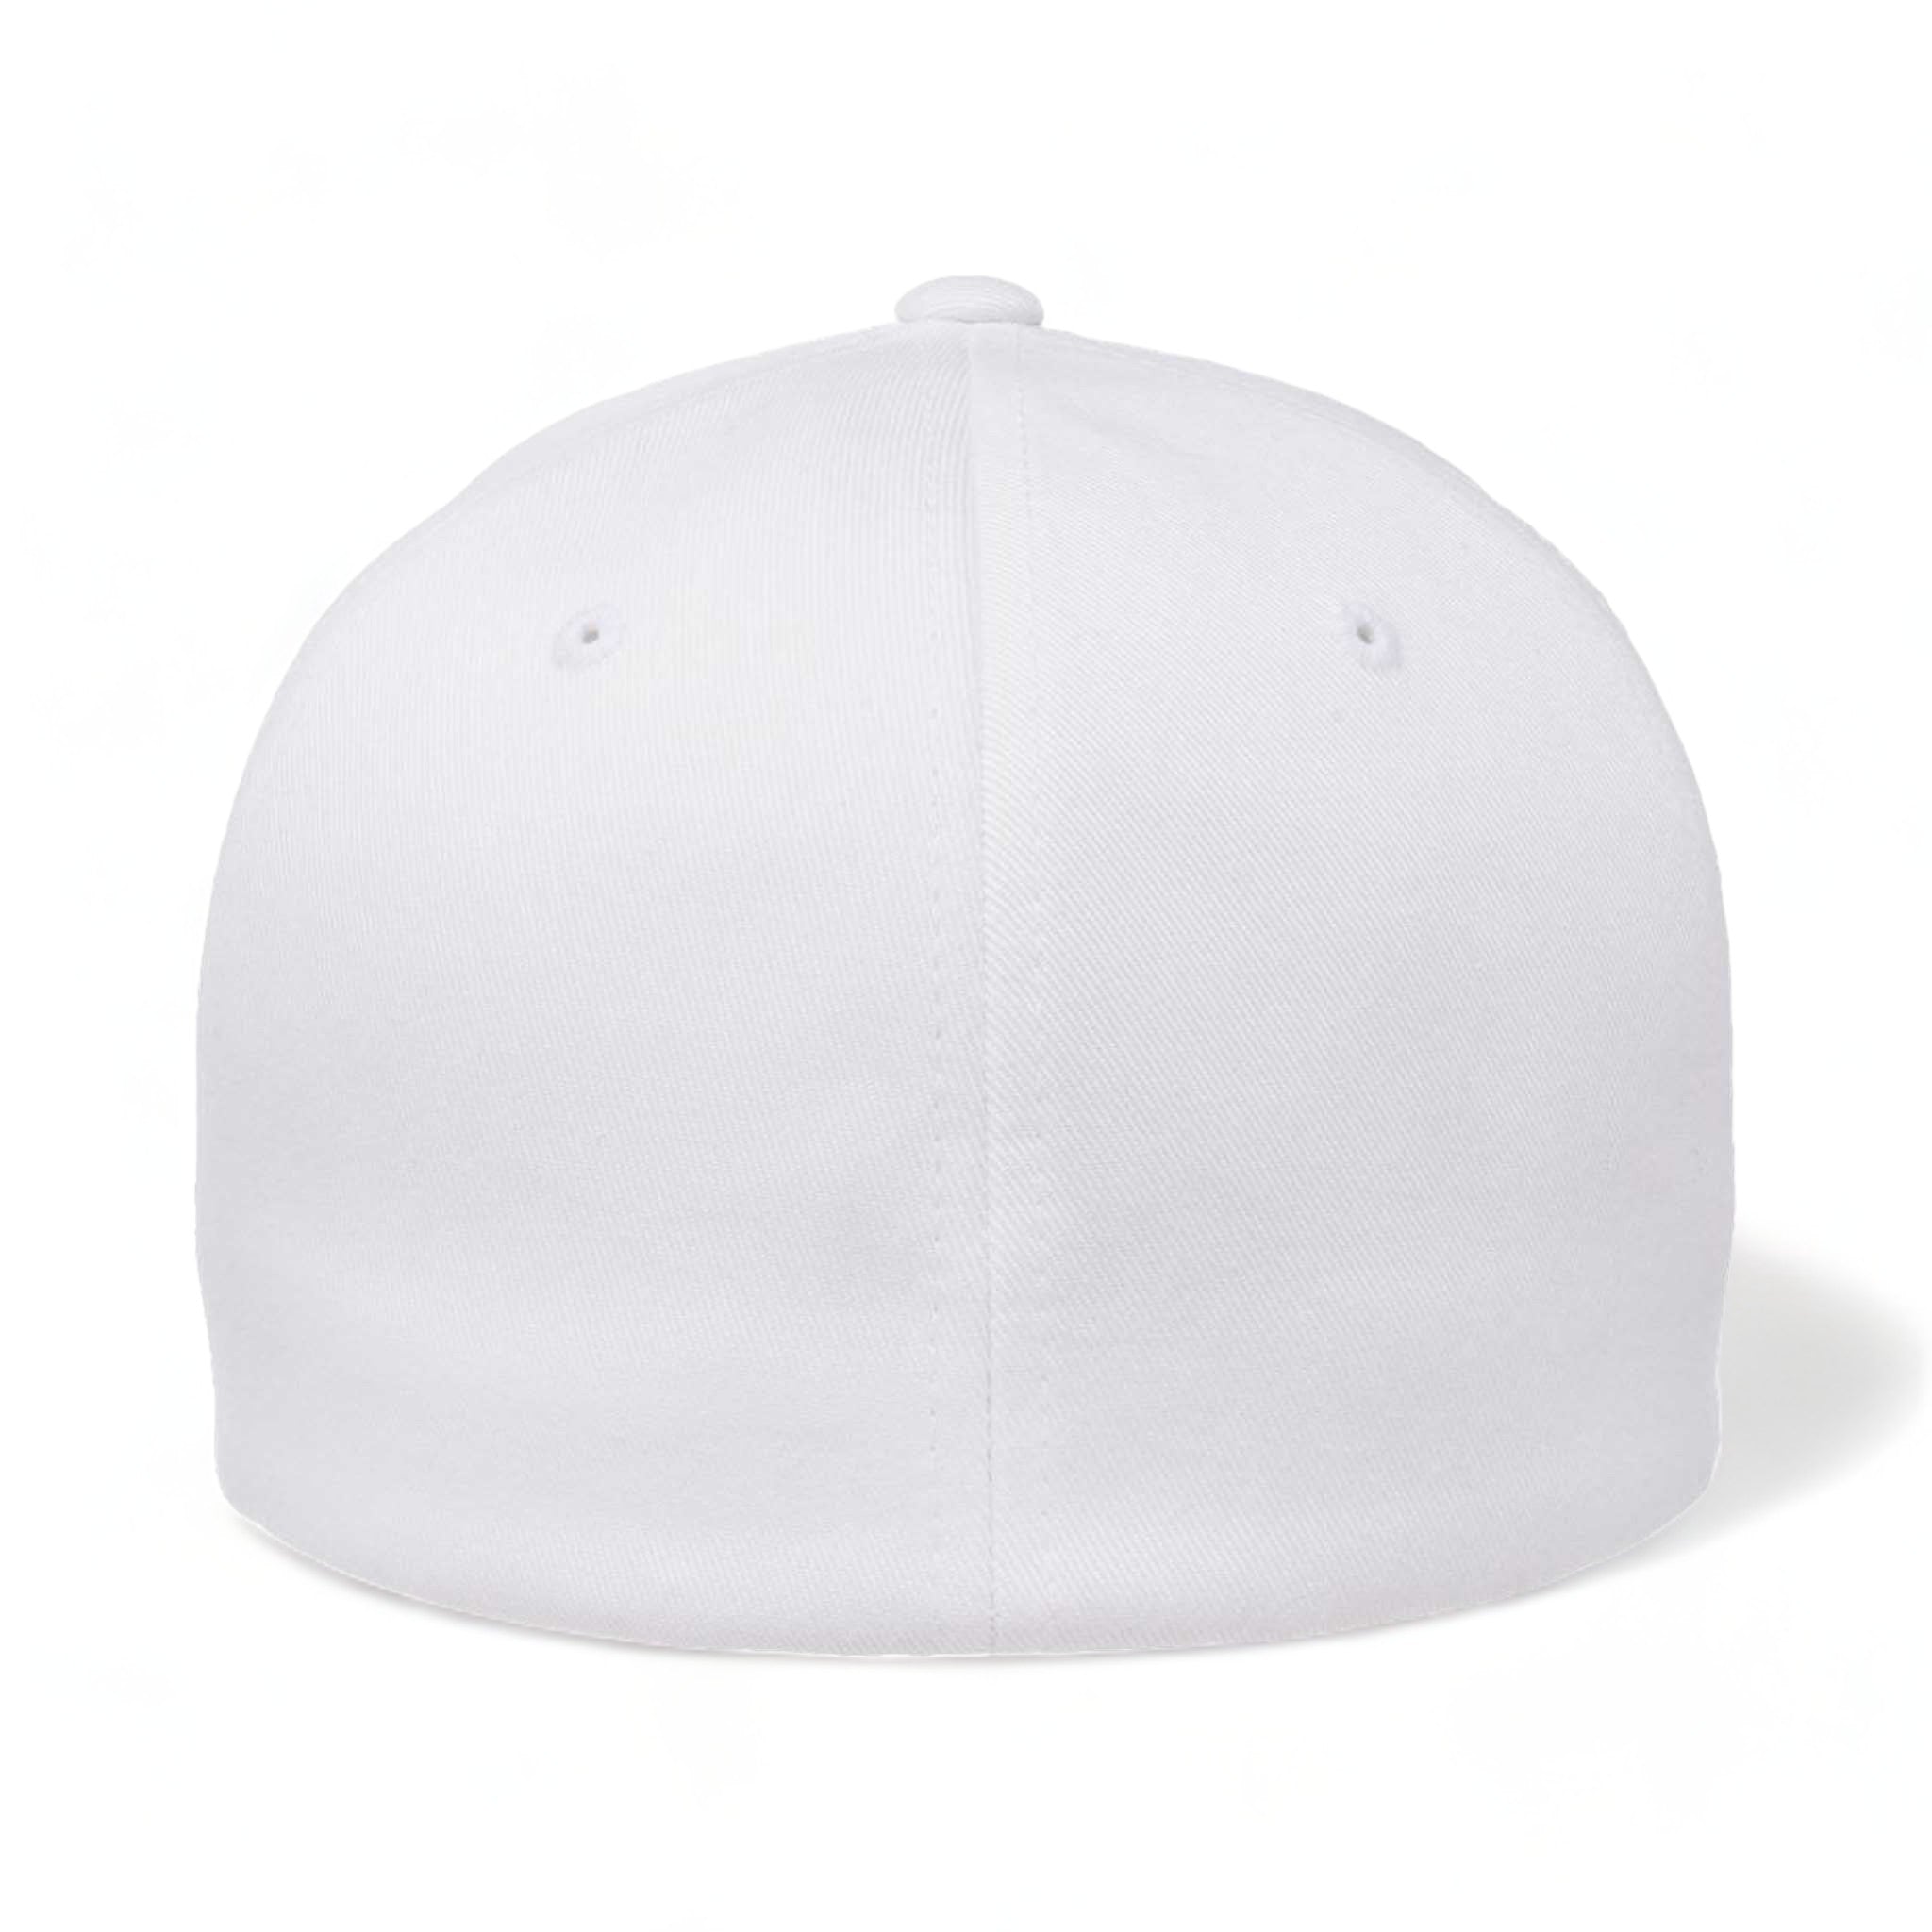 Back view of Flexfit 6277 custom hat in white